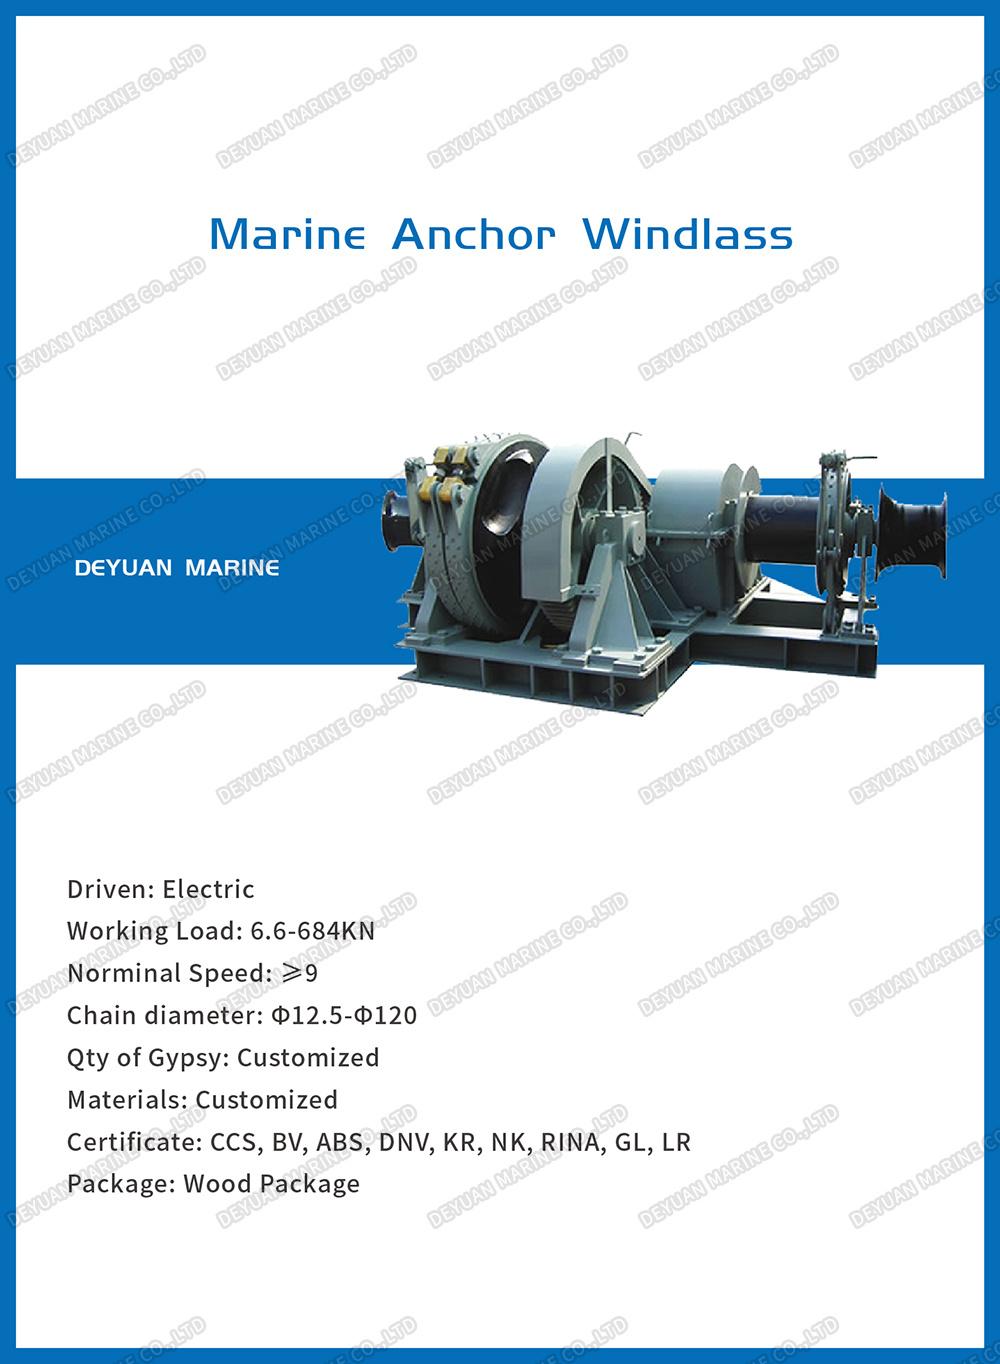 Double Gypsy Deck Anchor Windlass for Marine Use